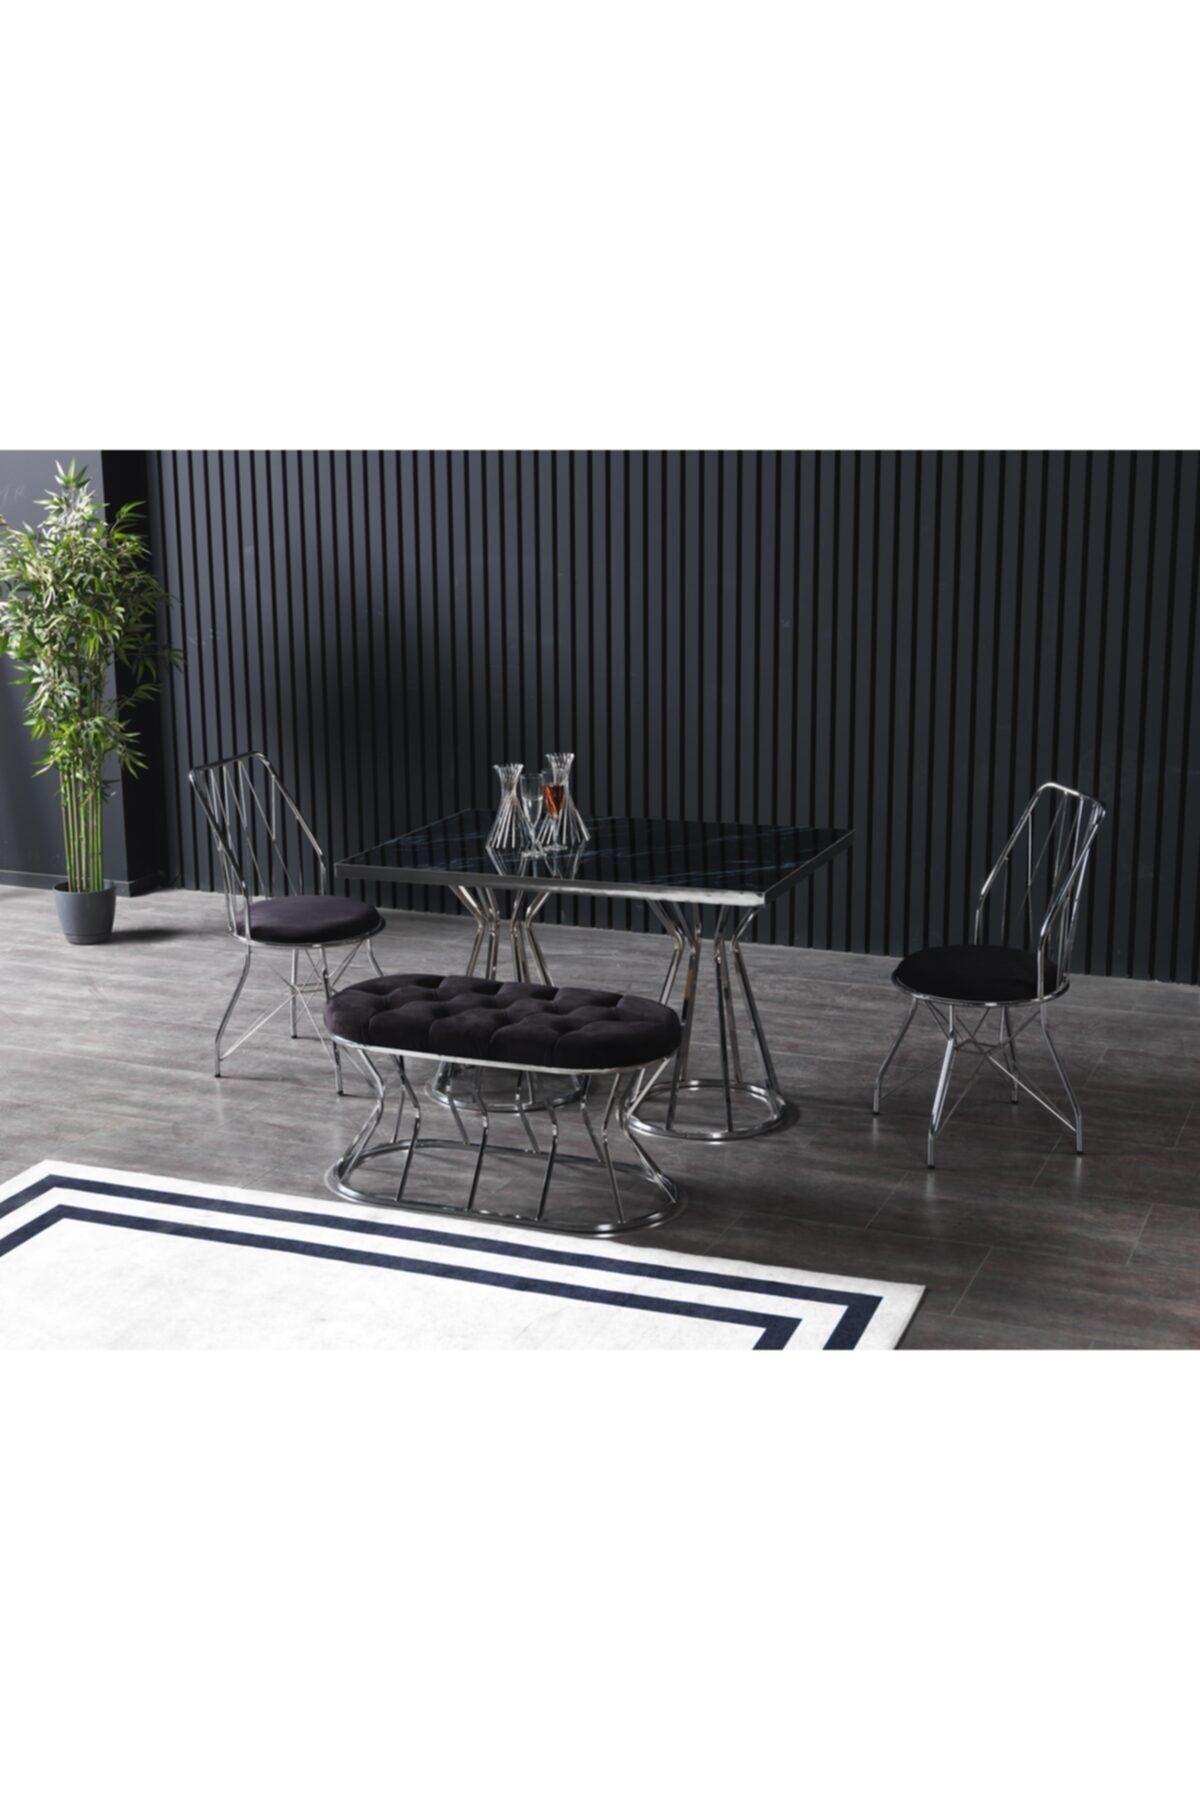 Ressa Home Gümüş Siyah Mermerli Mutfak Masası Takımı 80x120 Cm